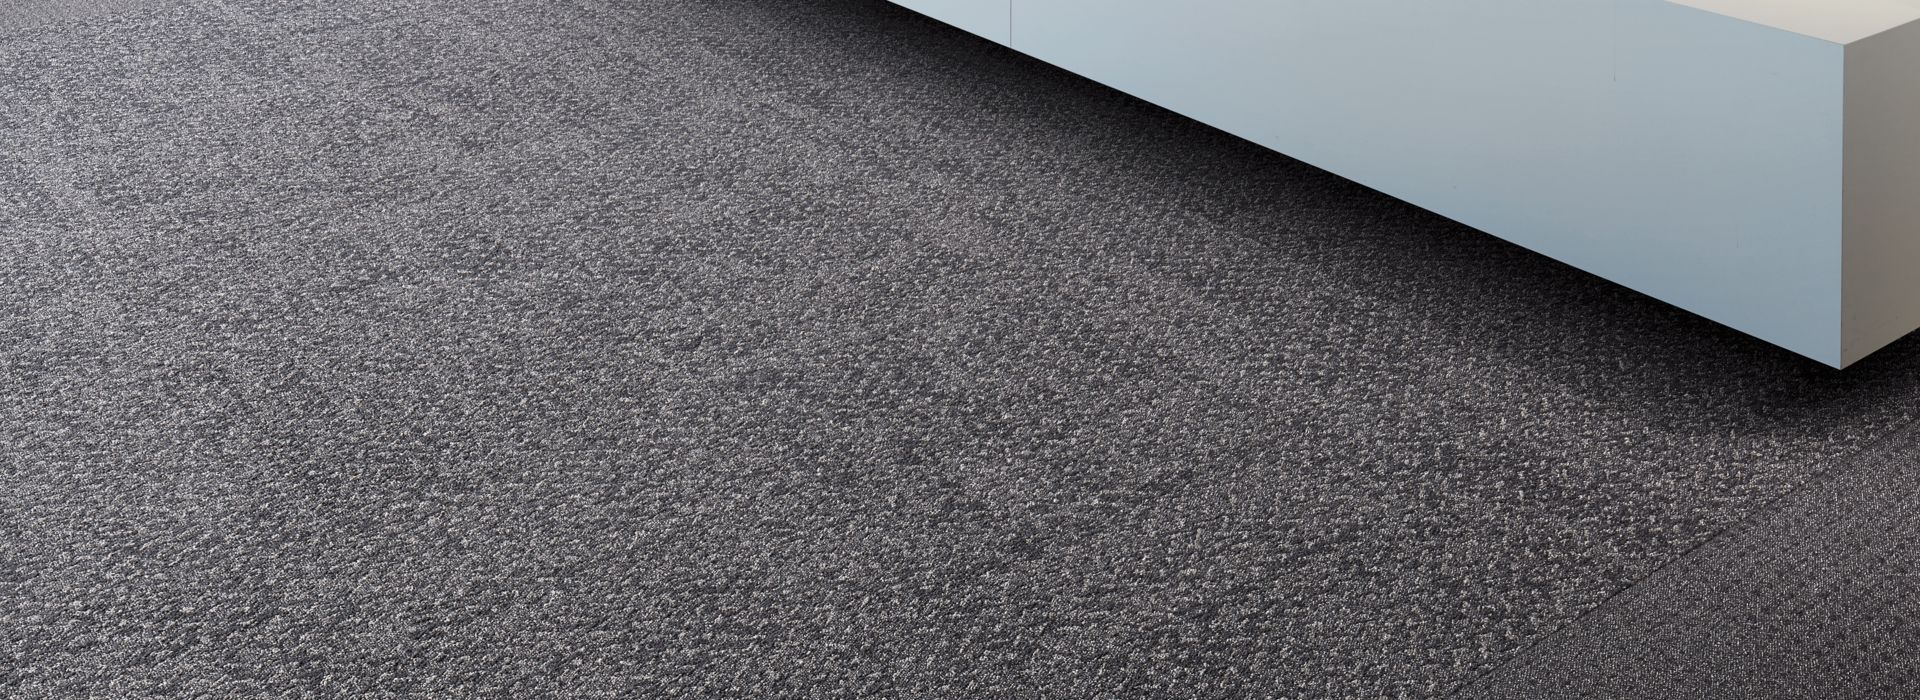 Interface Dover Street carpet tile in office with central white staircase número de imagen 1